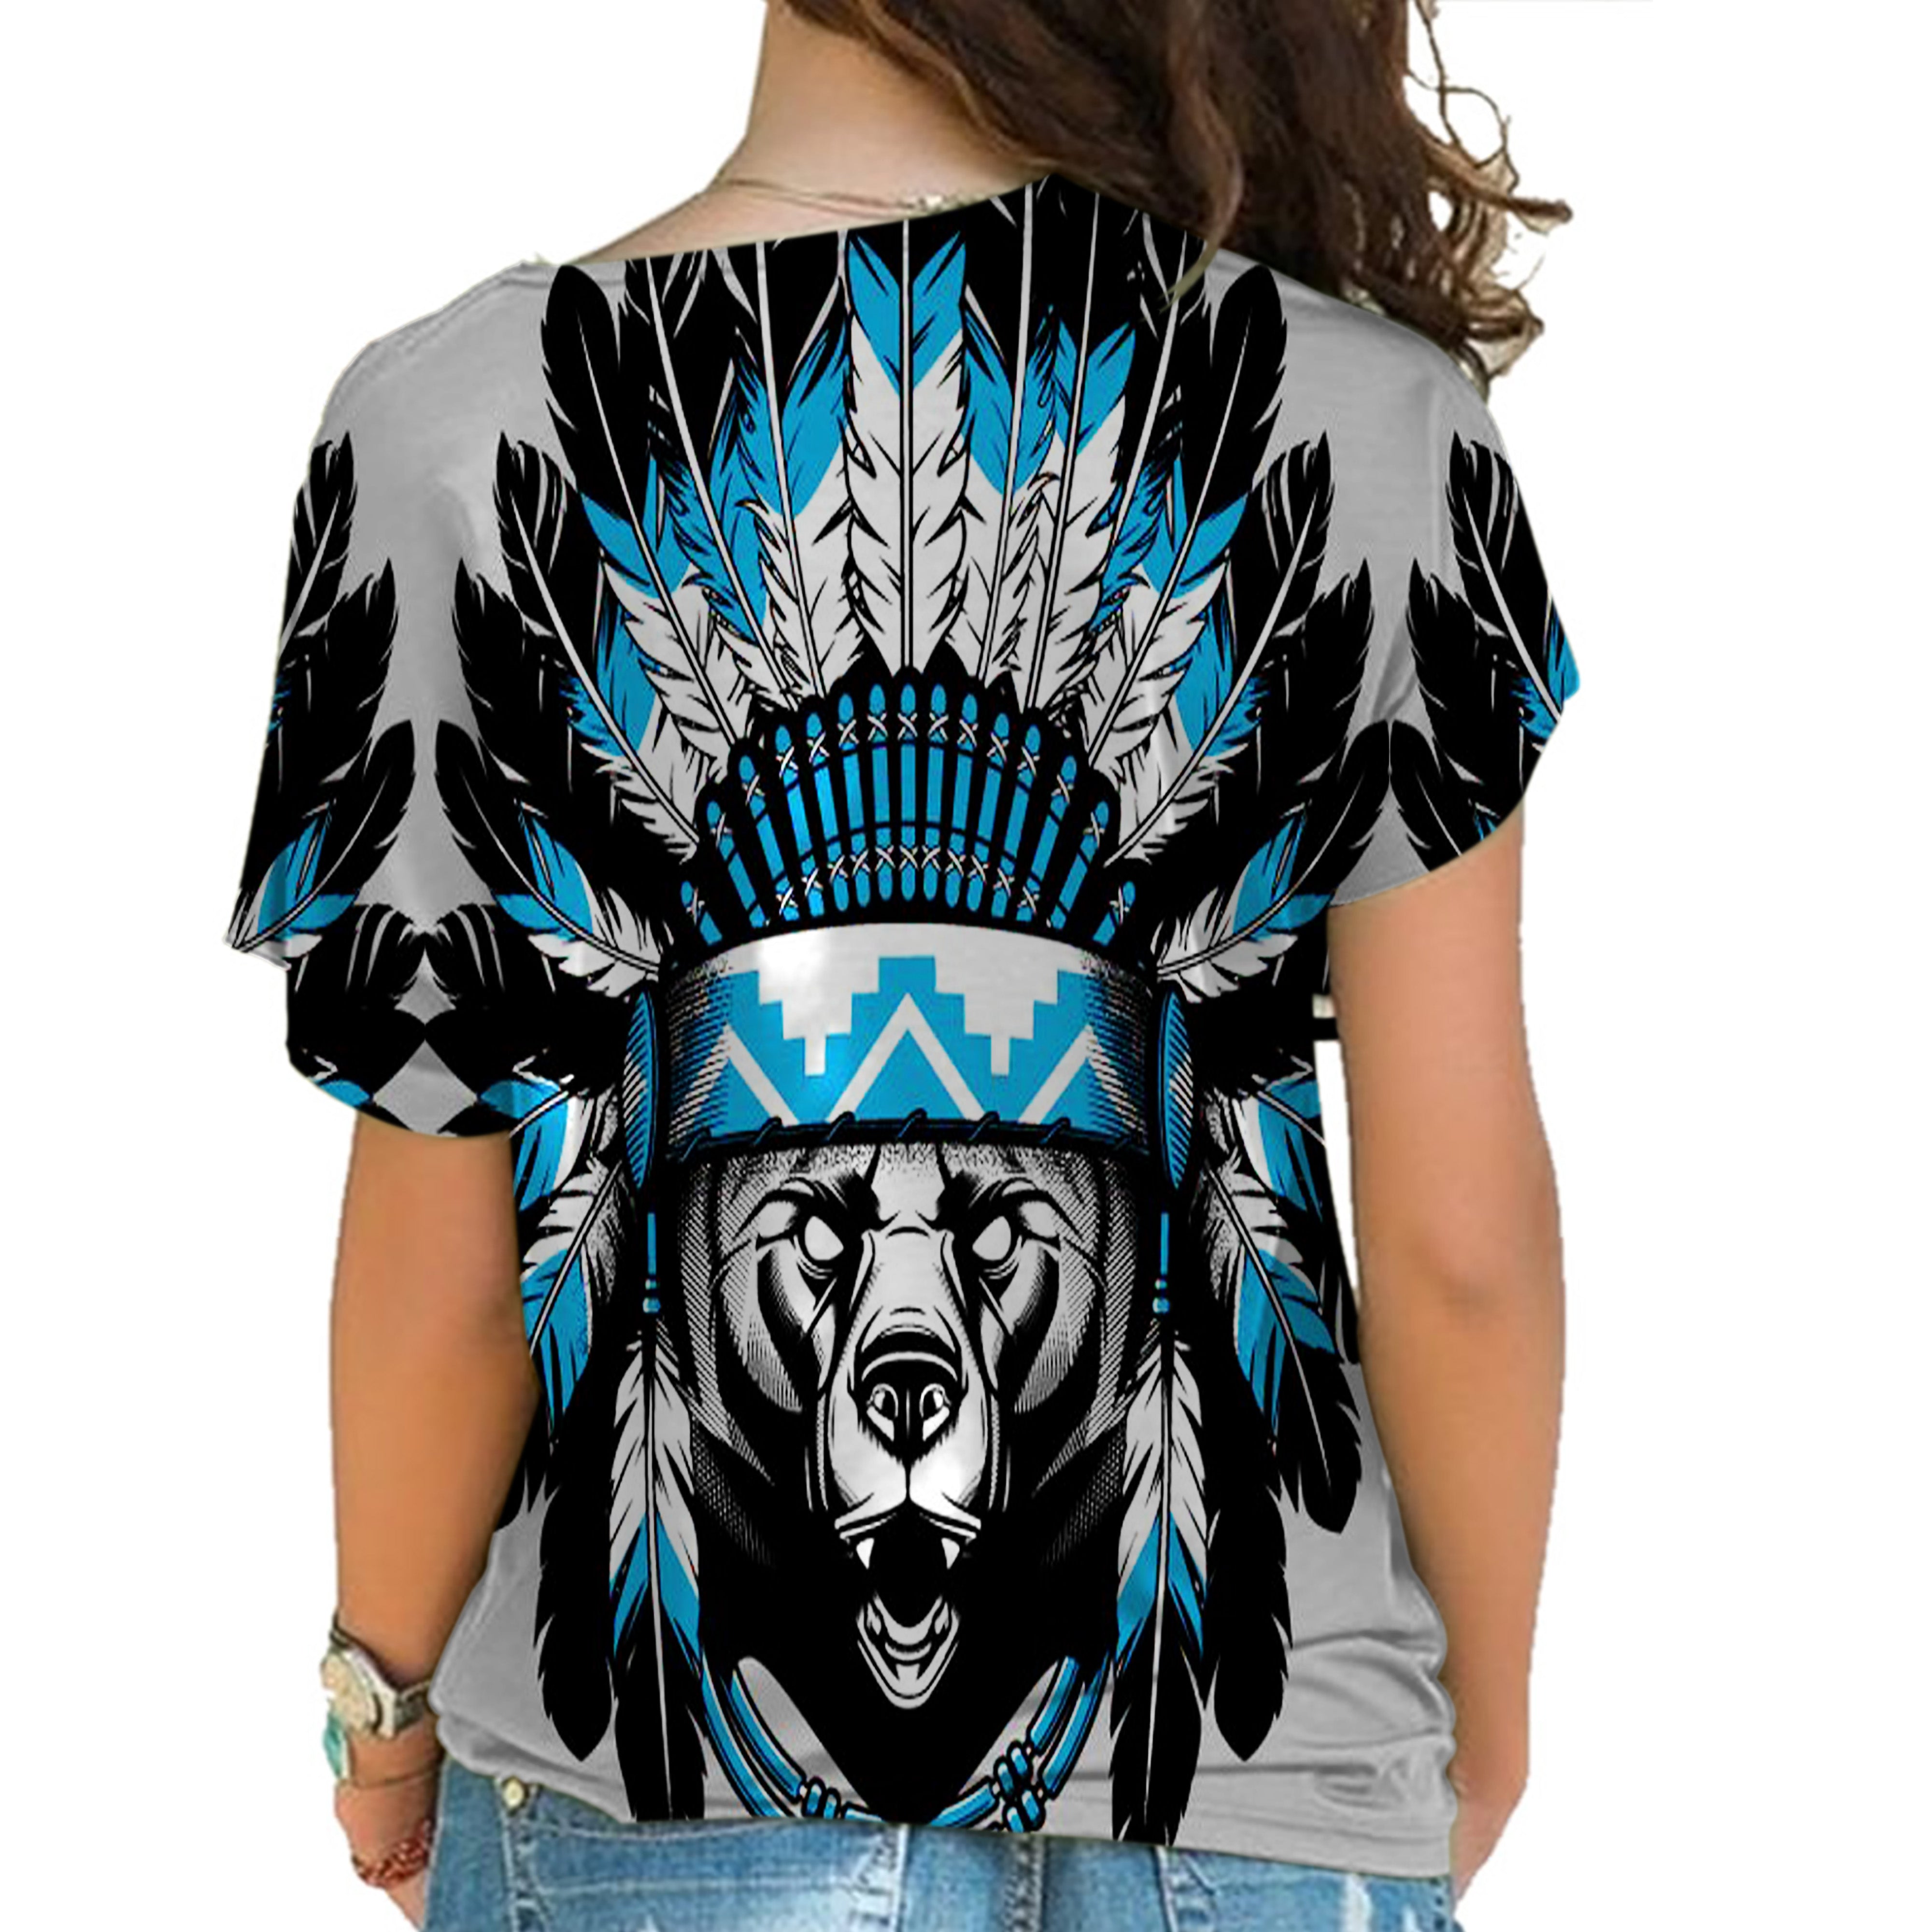 Powwow Store native american cross shoulder shirt 1137